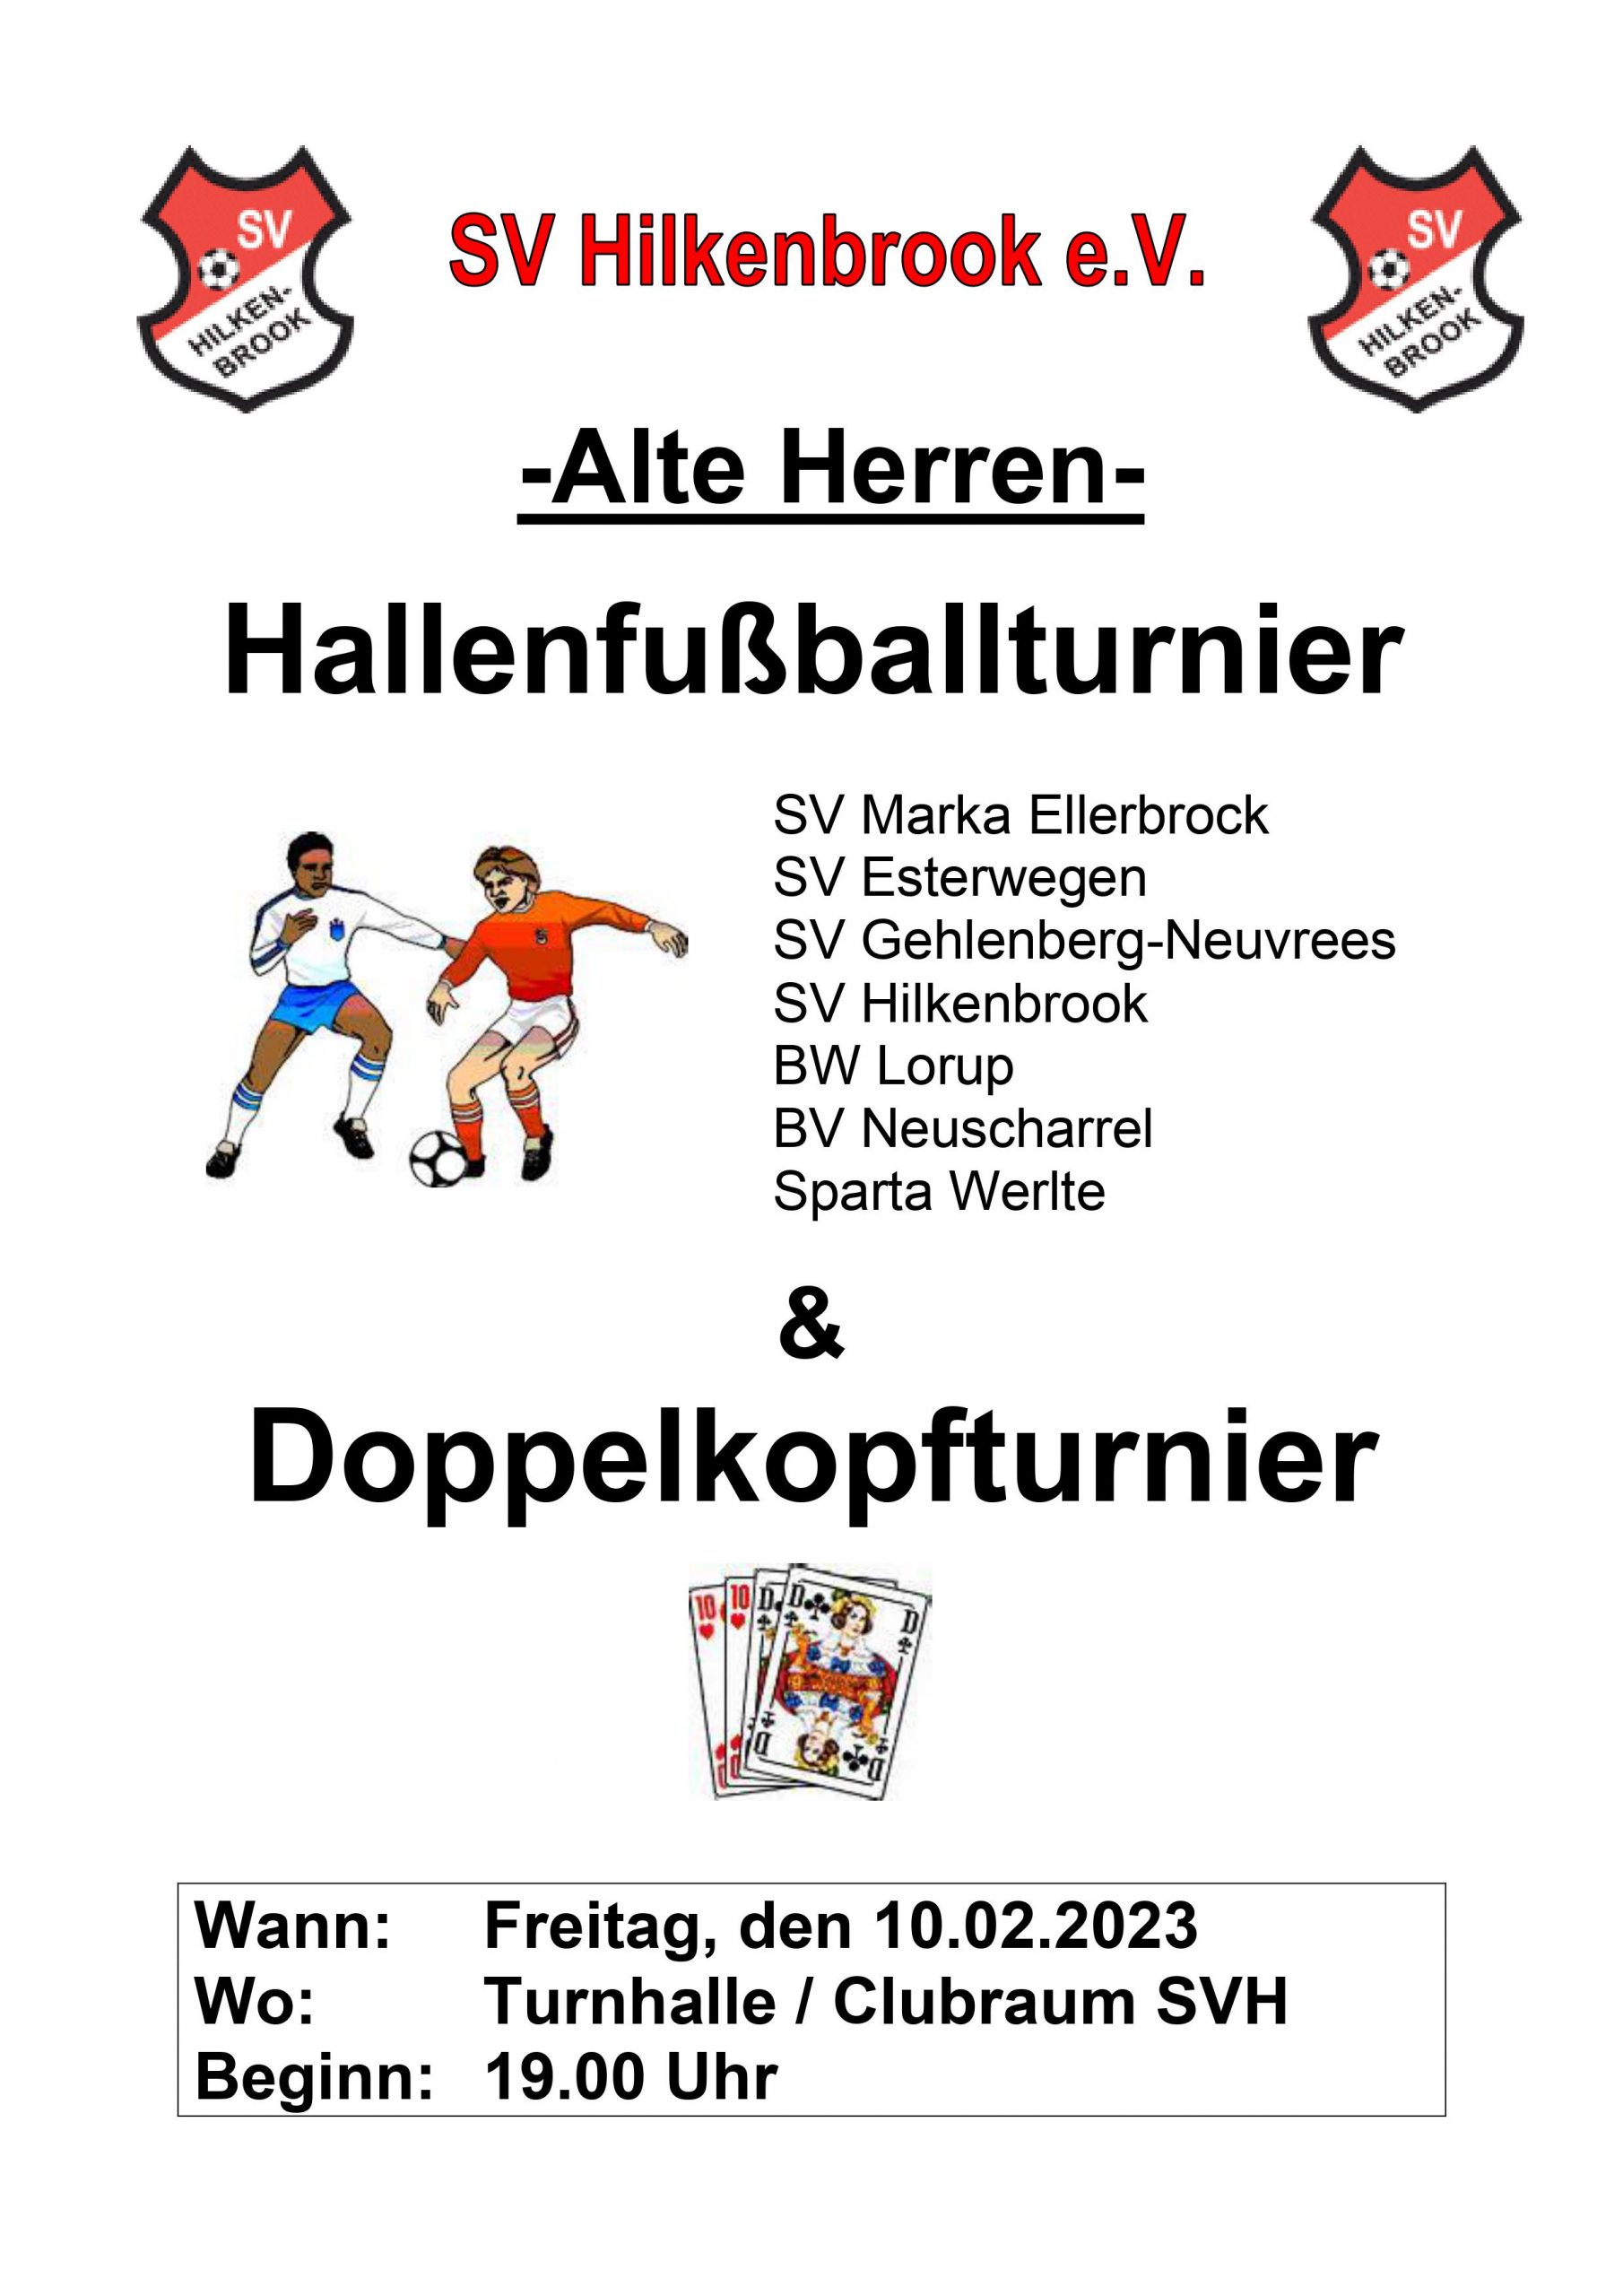 You are currently viewing Alte Herren Hallenfußballturnier & Doppelkopfturnier 2023